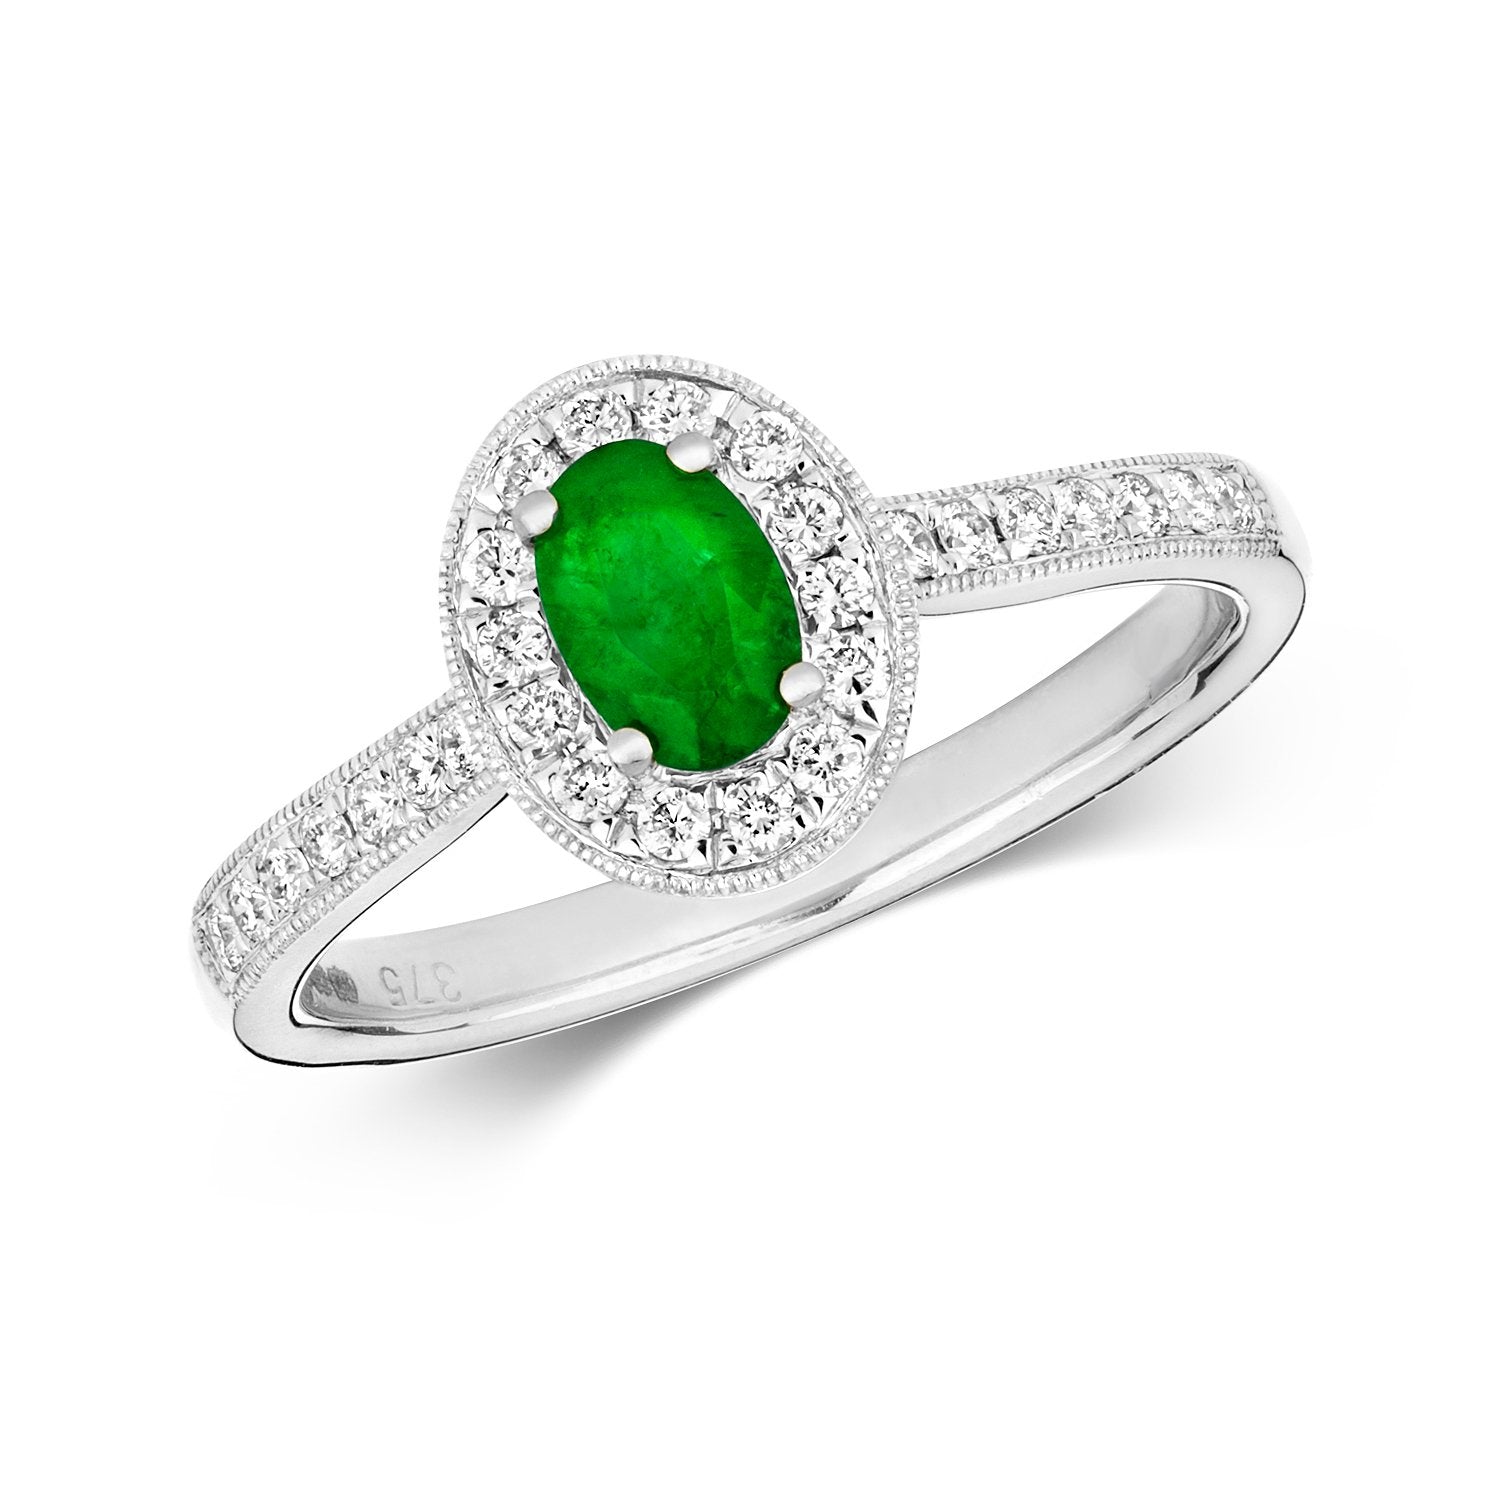 Emerald & Diamond Oval Shape Ring (Rd416e)